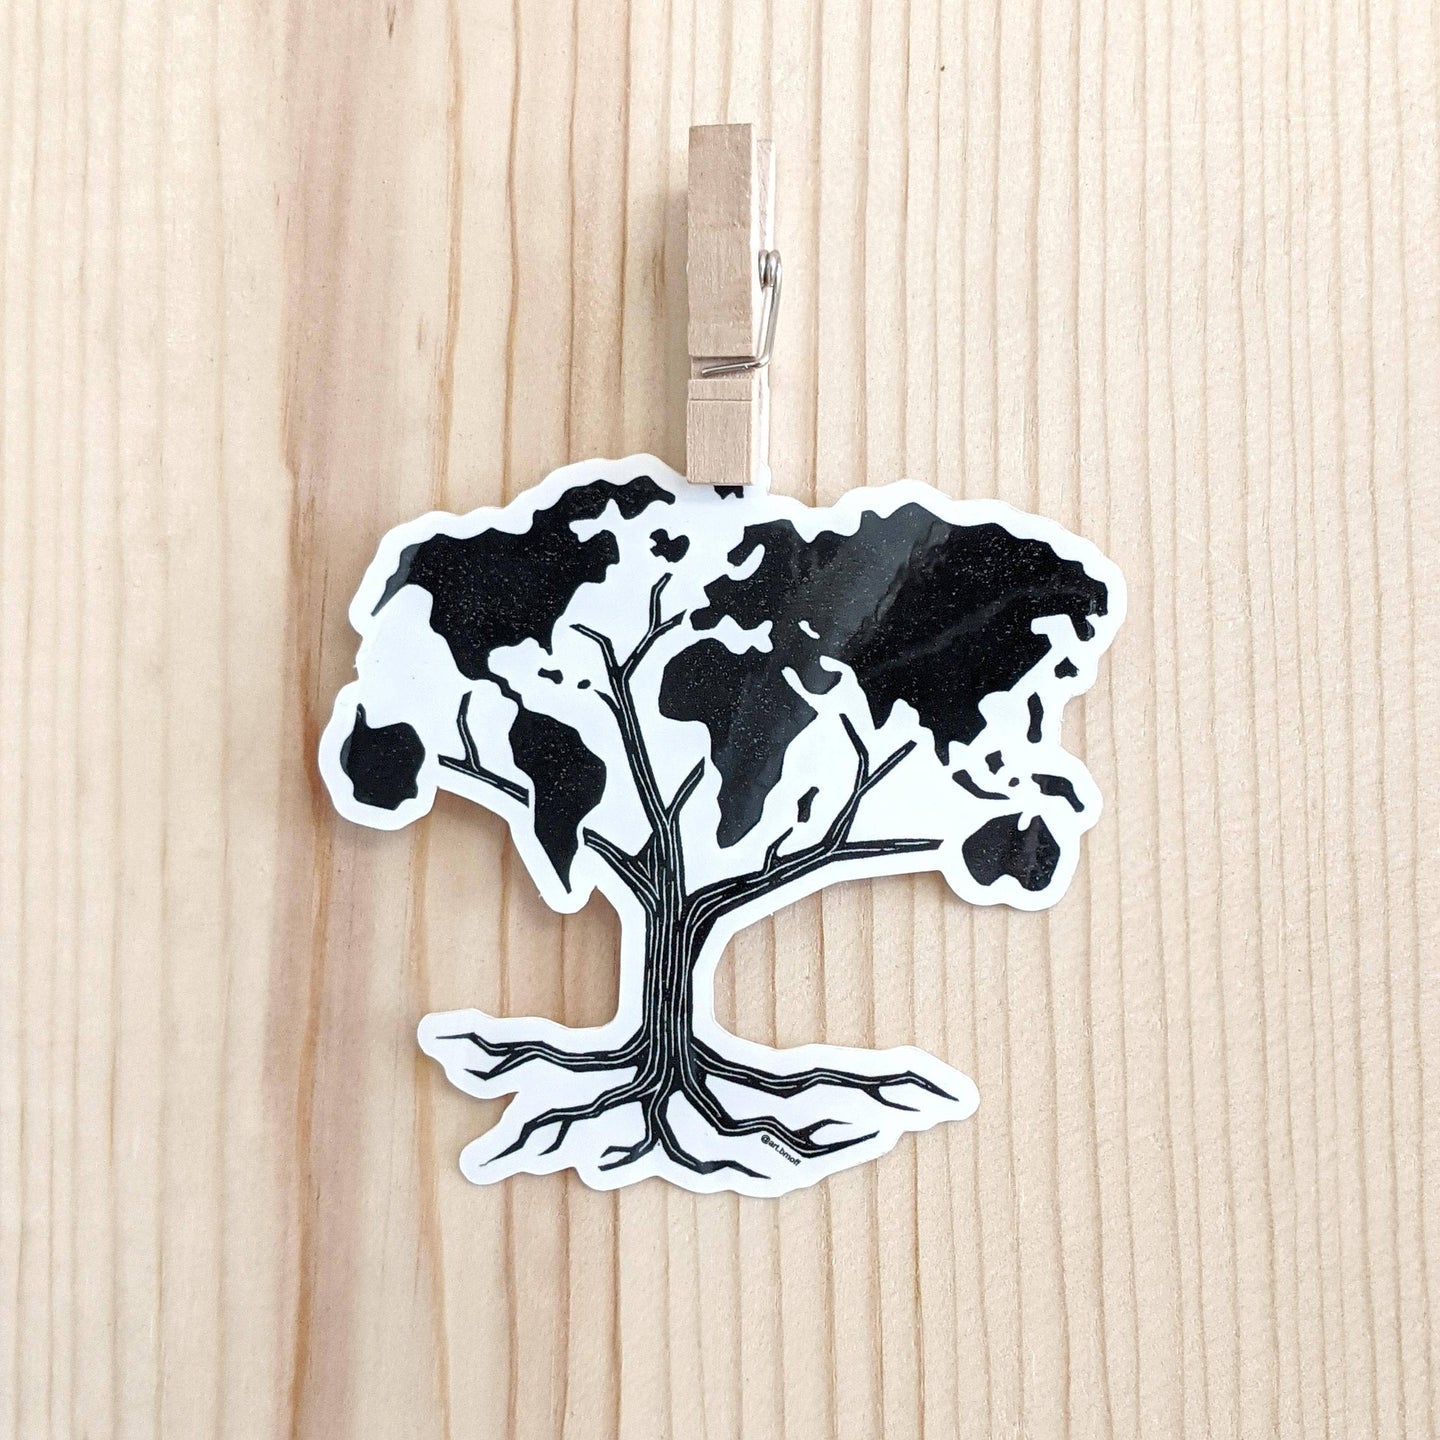 BMoff Art - Block Print Continents Tree Vinyl Sticker